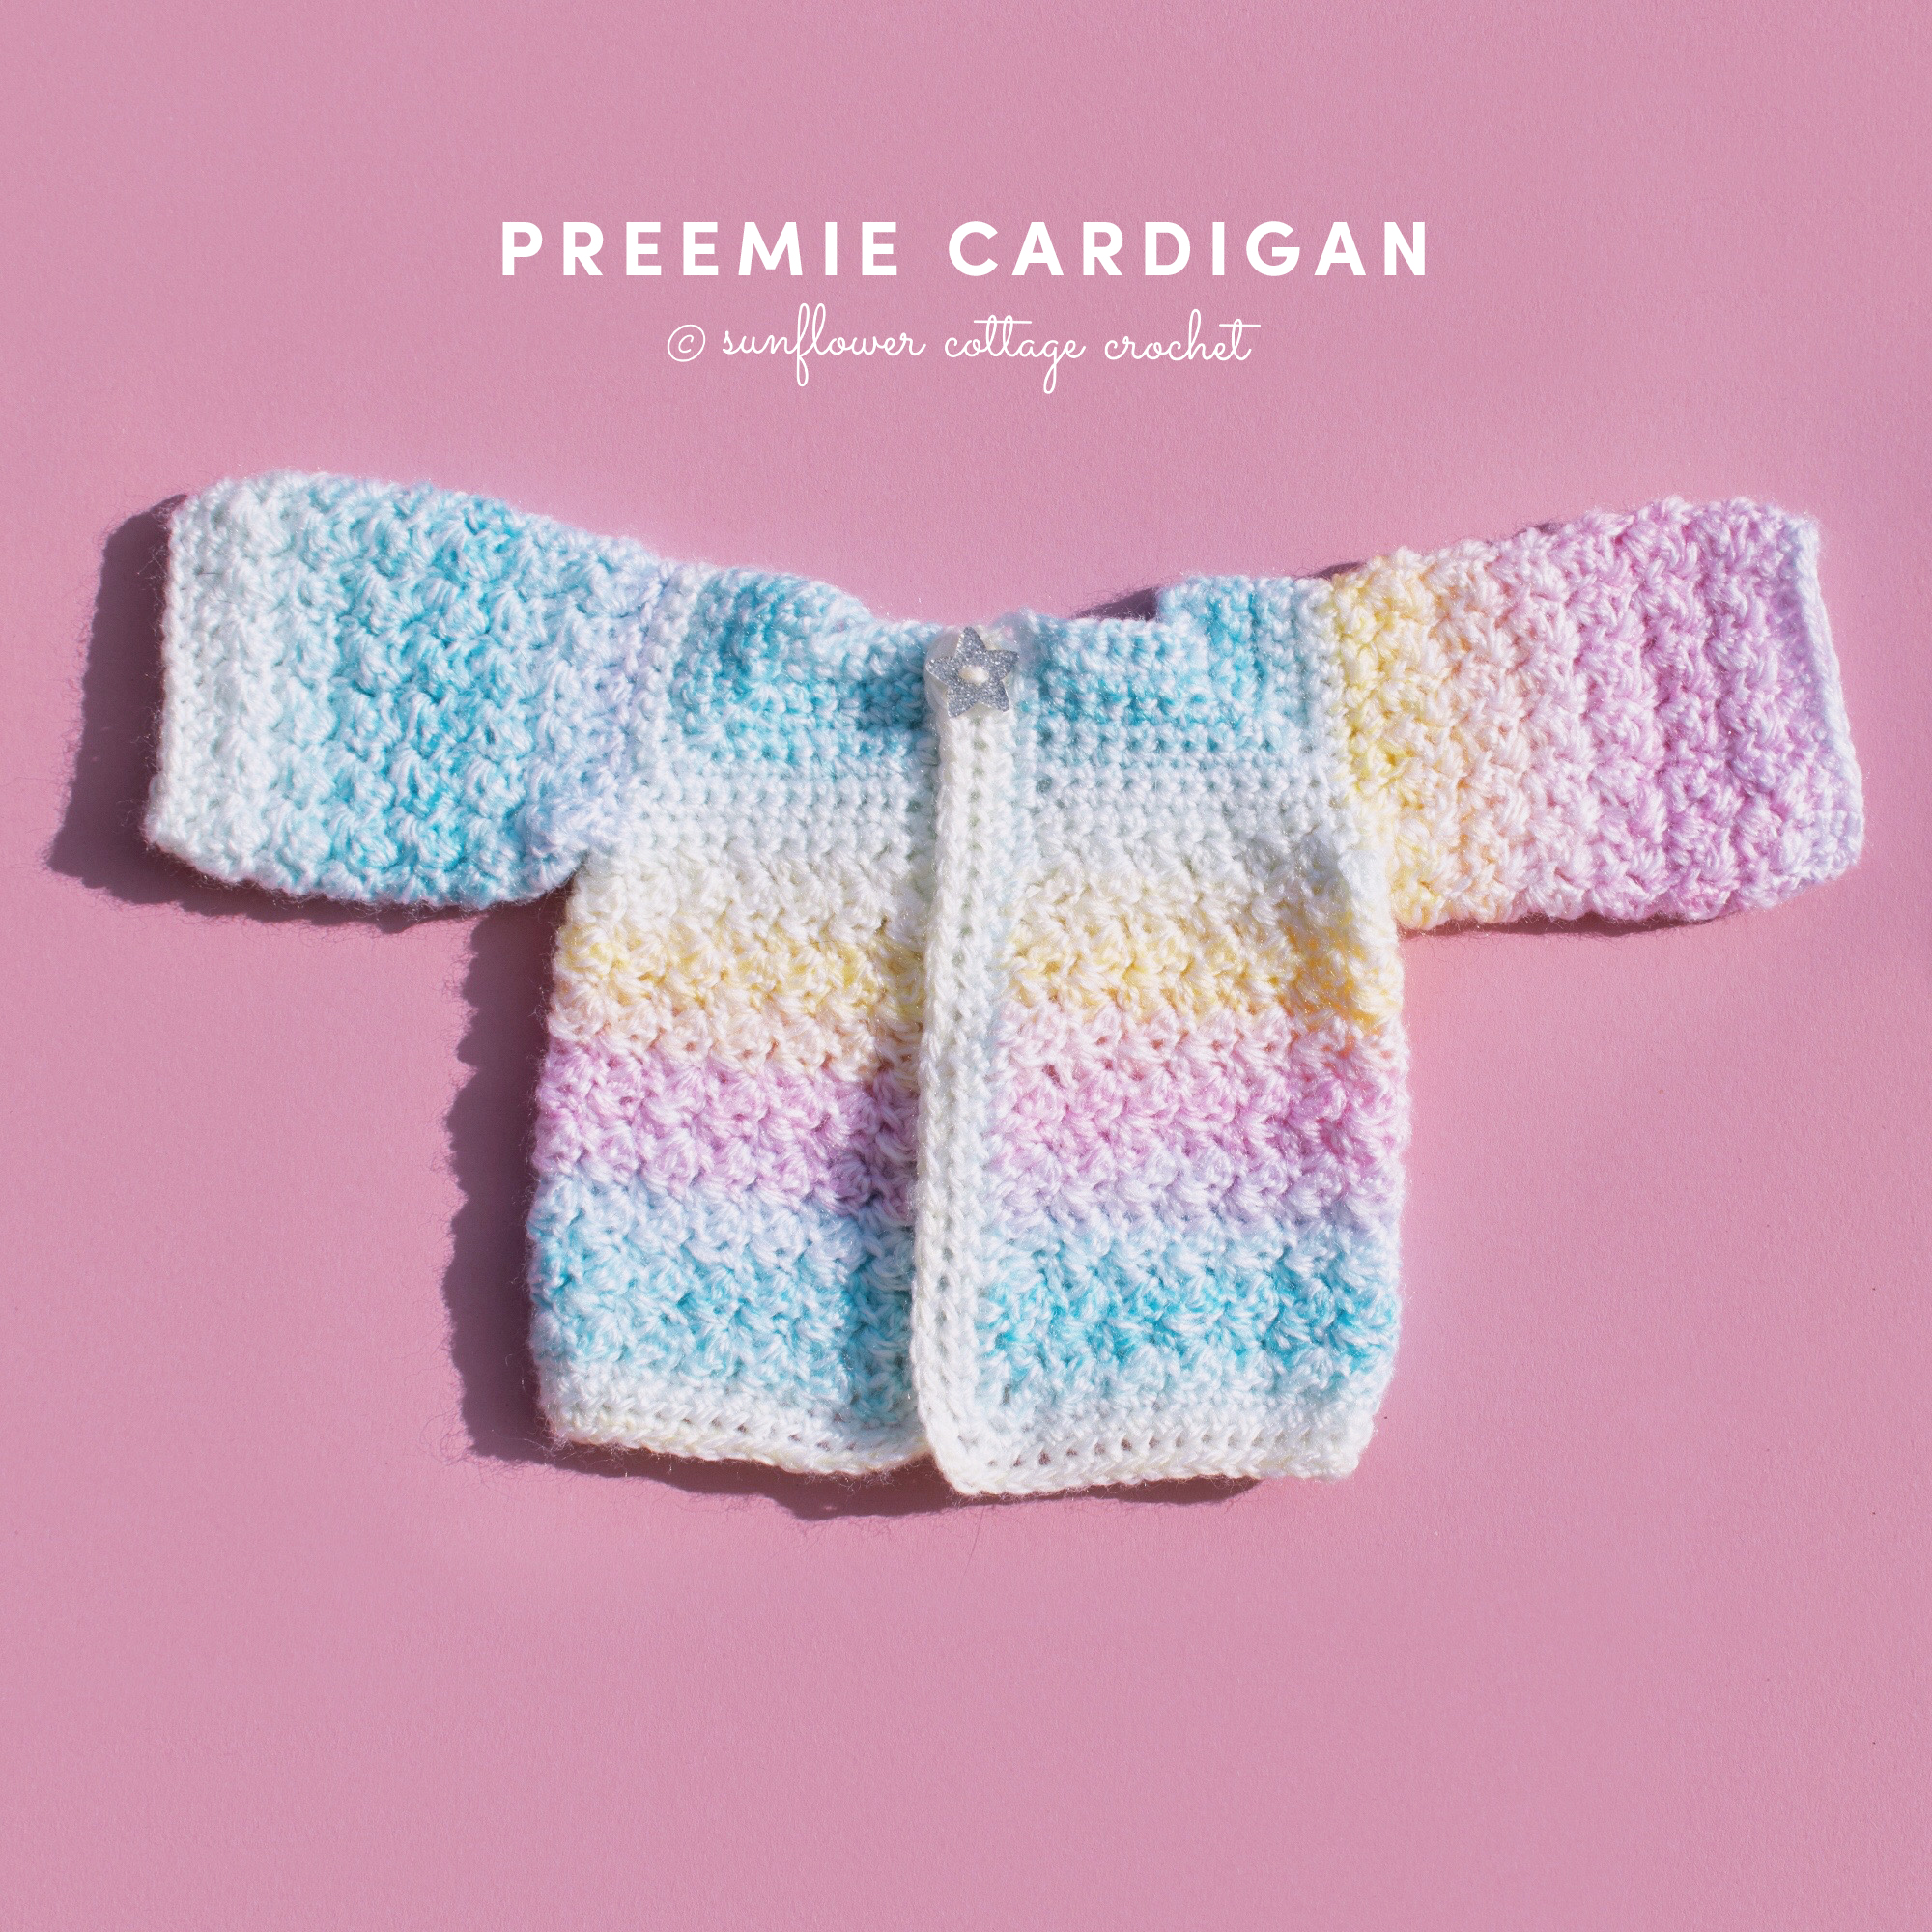 Preemie Cardigan Free pattern